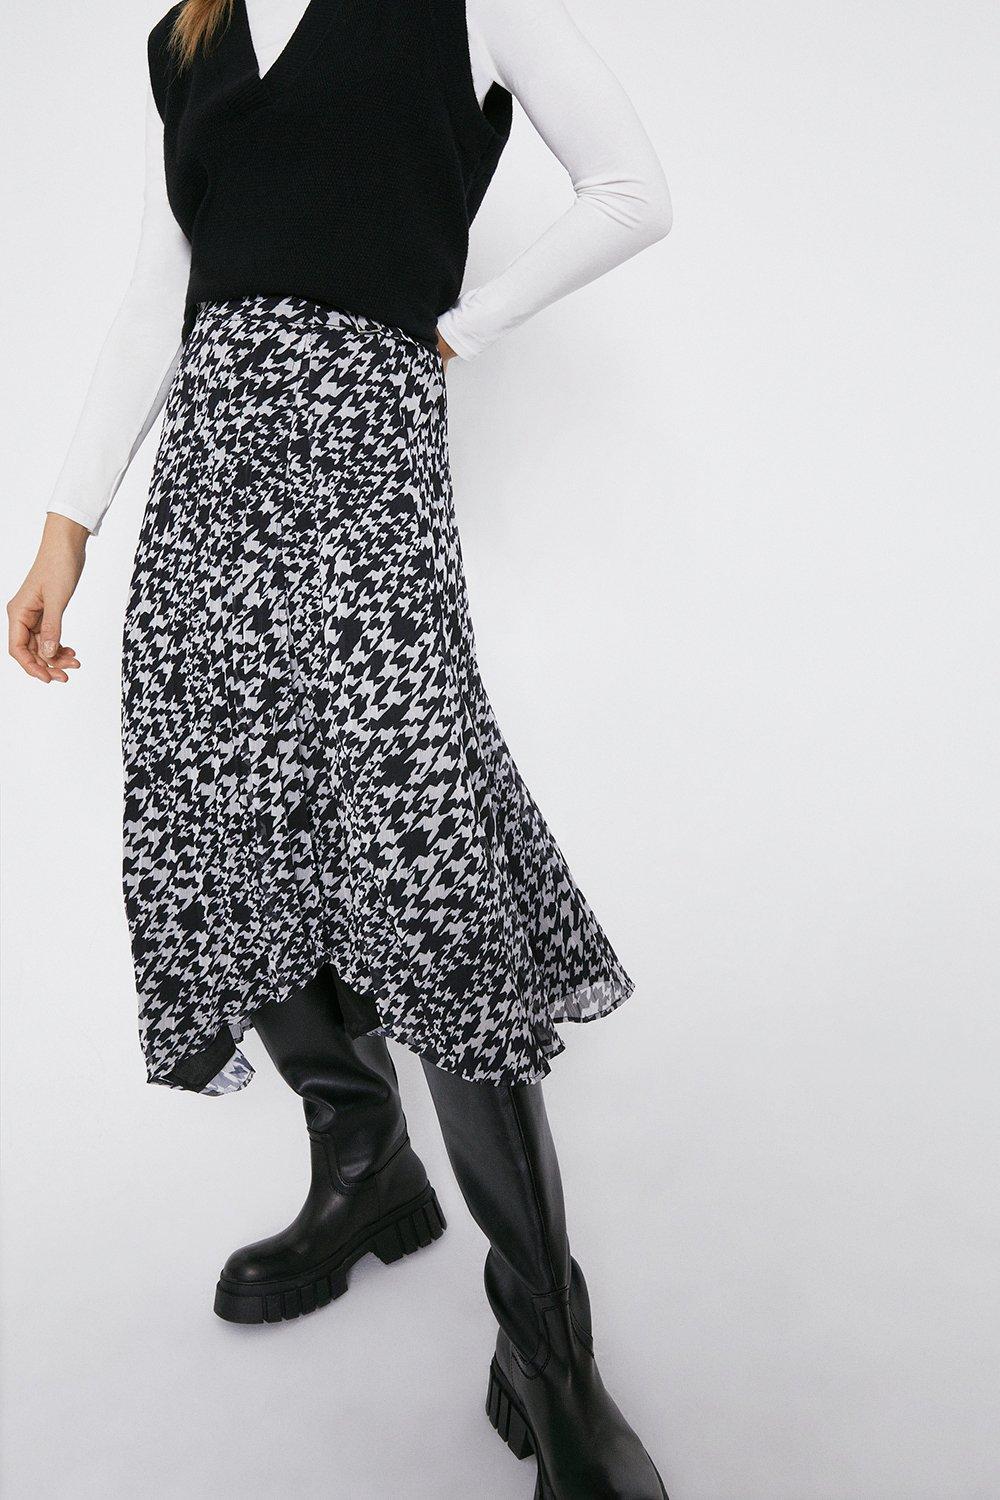 Midi Skirts |Satin Midi Skirts & Pleated Midi Skirts | Warehouse UK